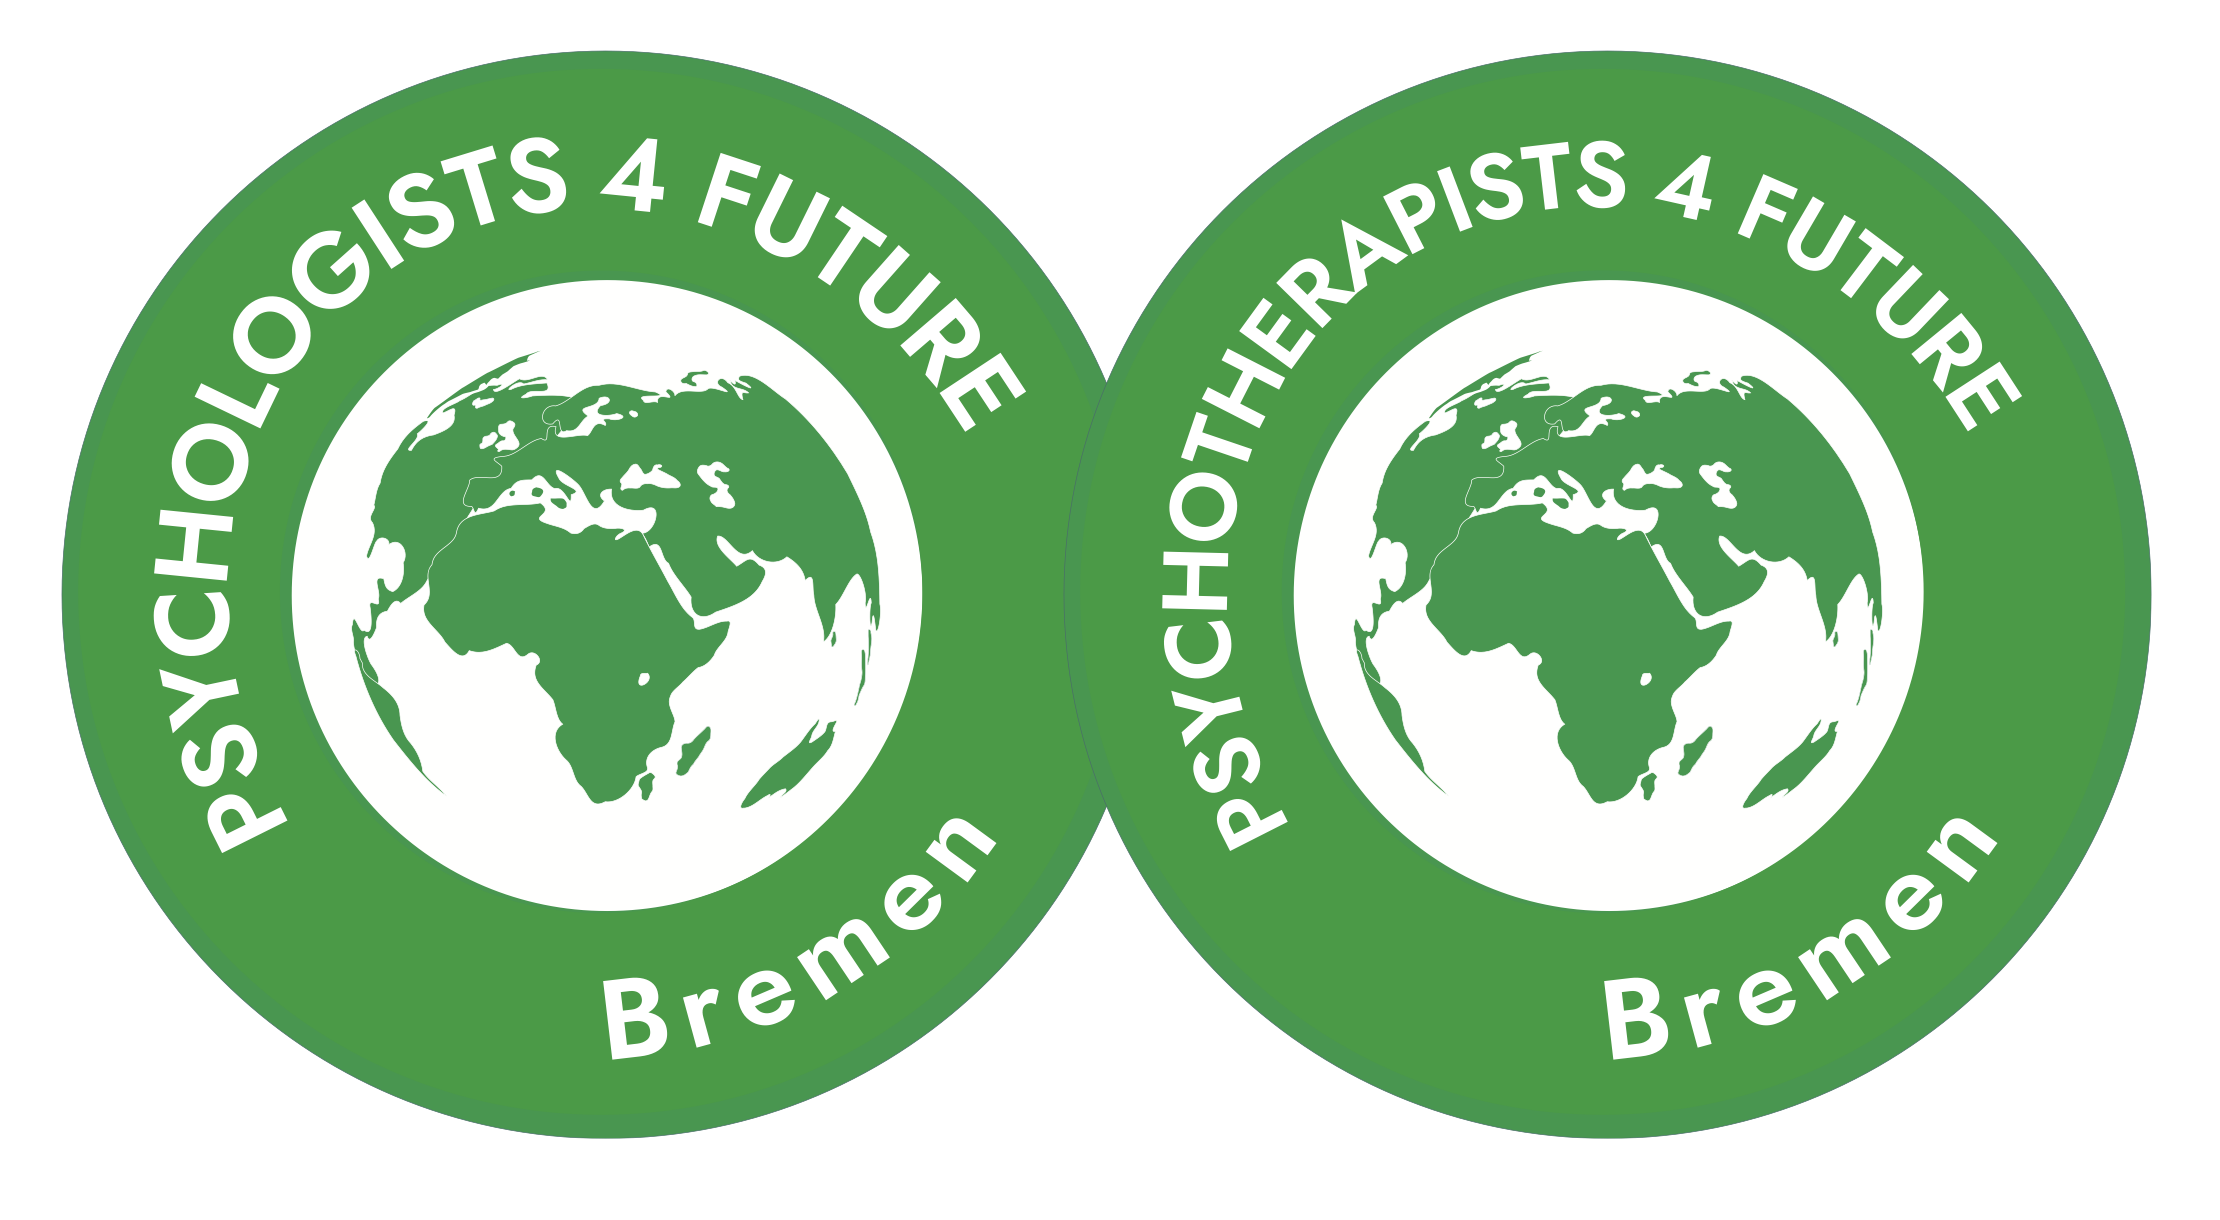 Psychologists / Psychotherapists for Future Bremen Logo